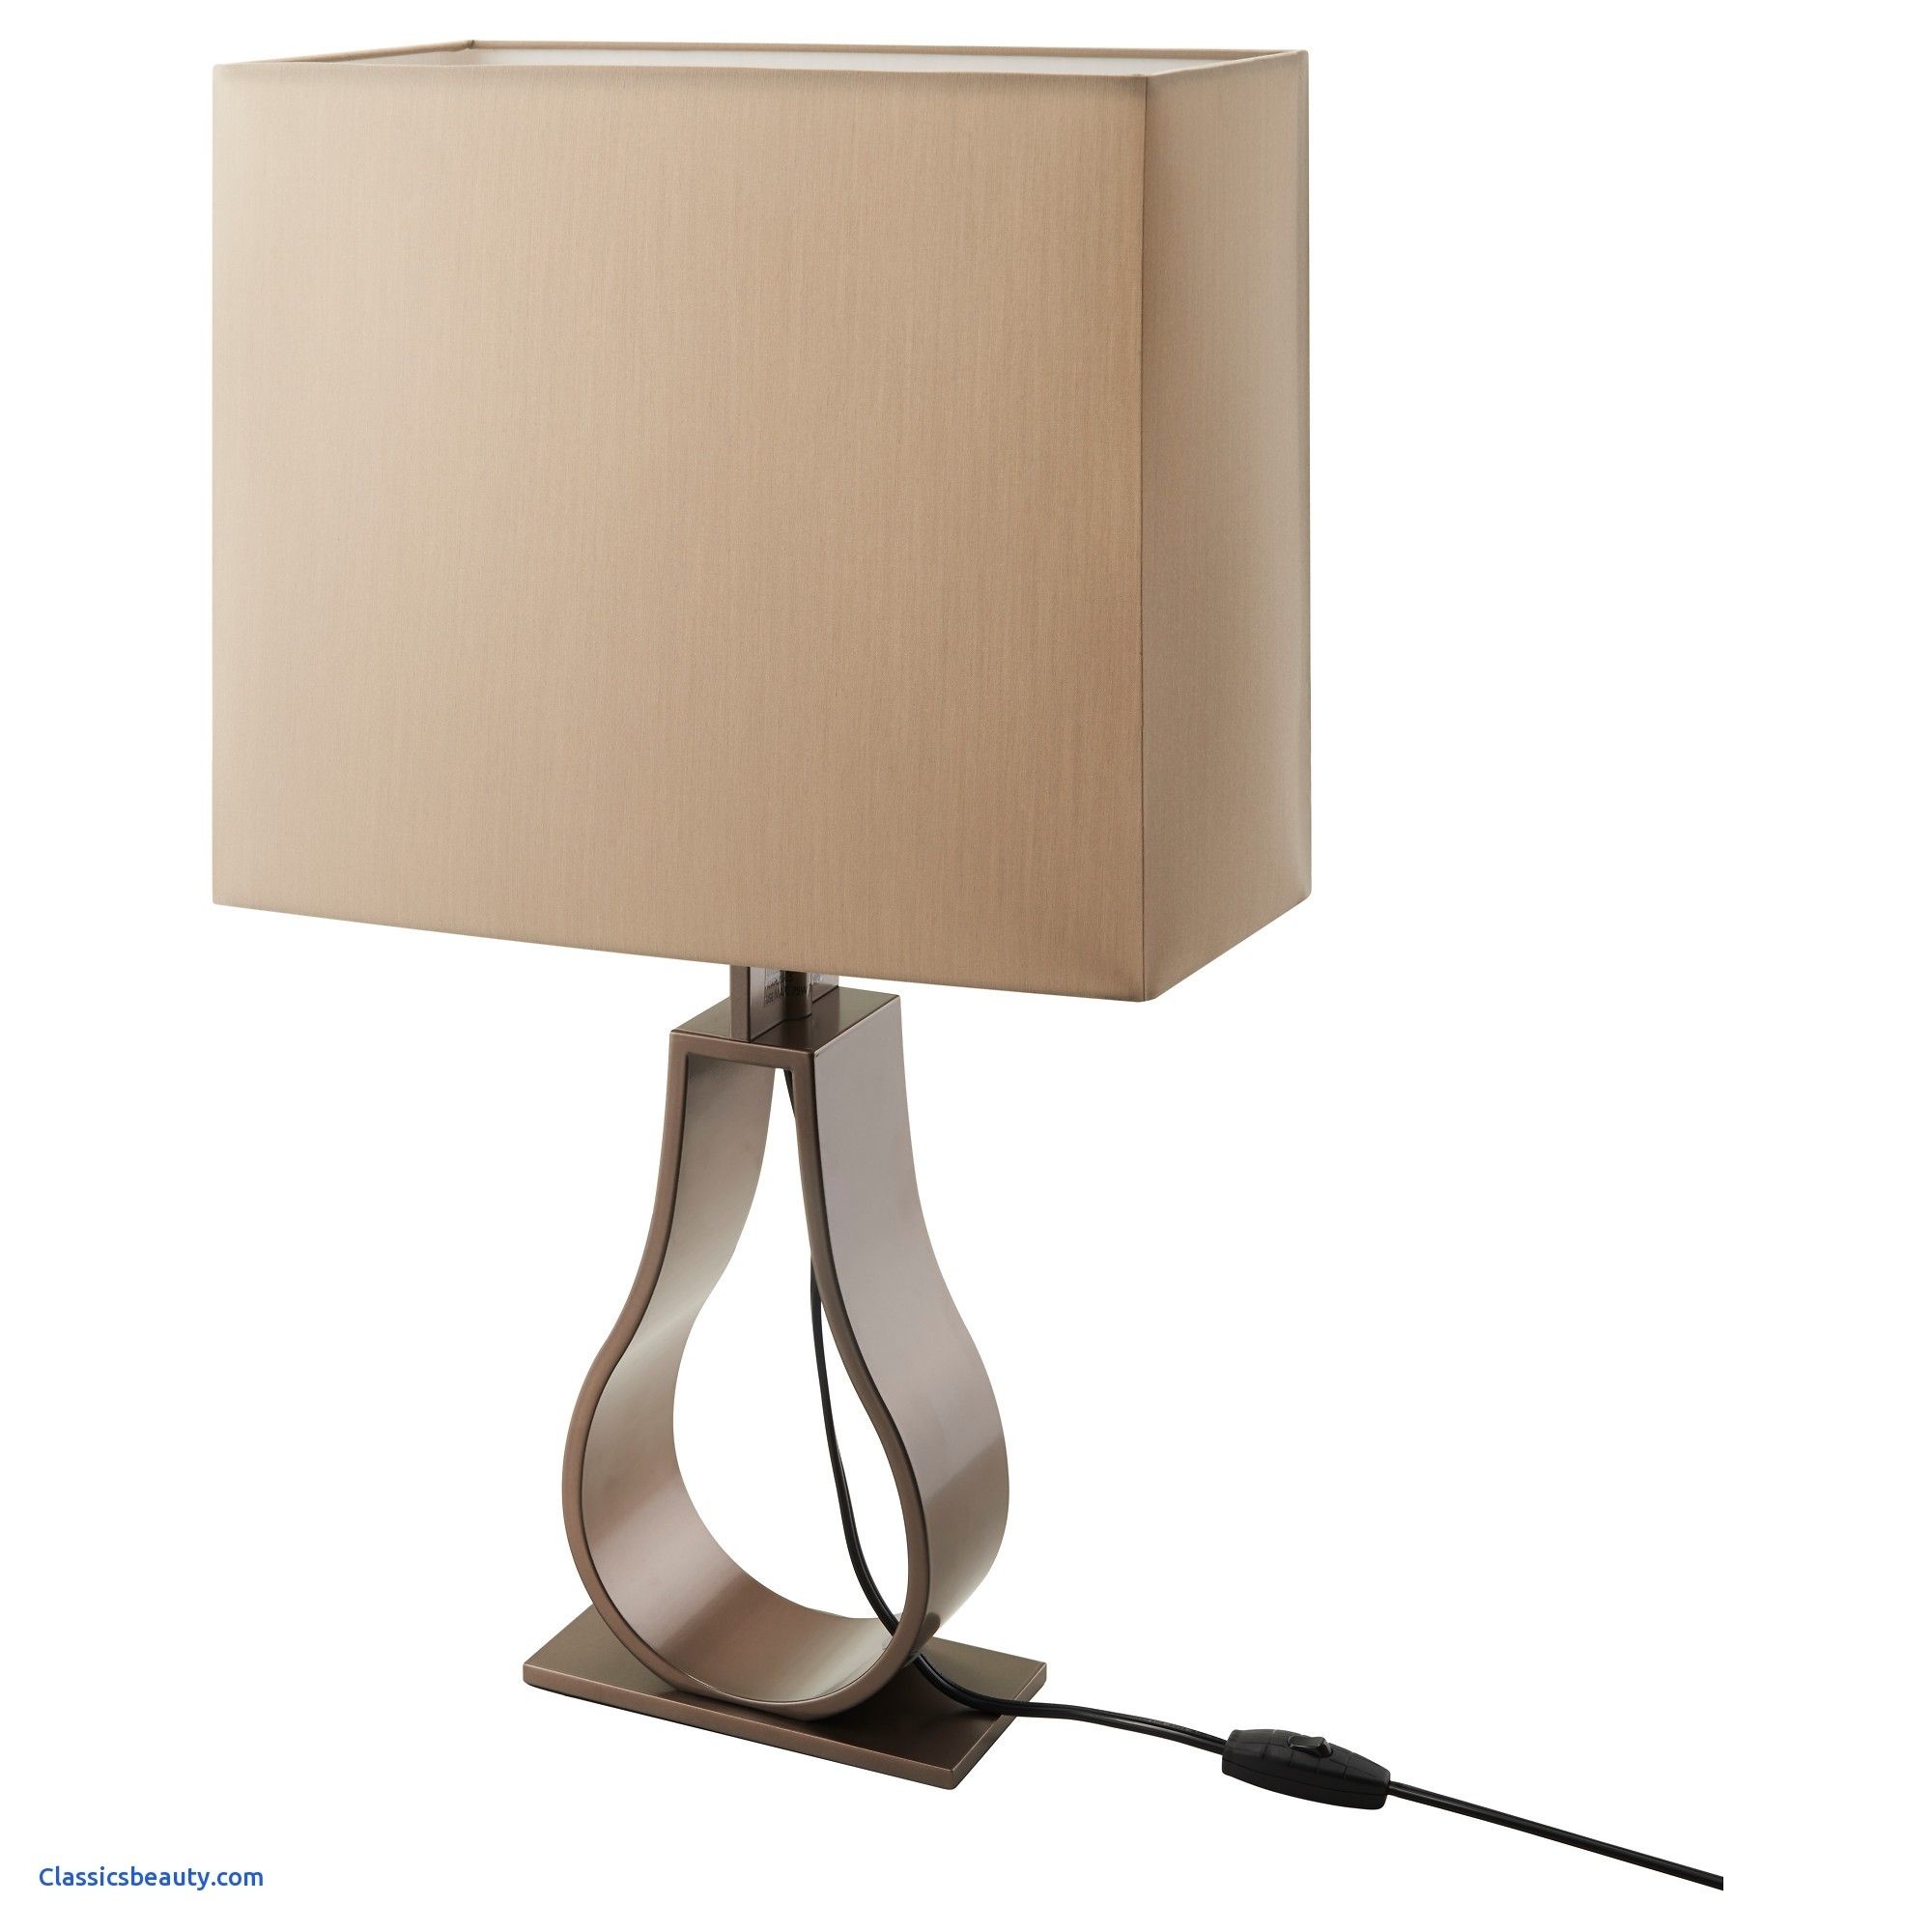 Top 55 Splendid Walmart Floor Lamps Ceramic Table For Living Room Intended For Amazon Living Room Table Lamps 